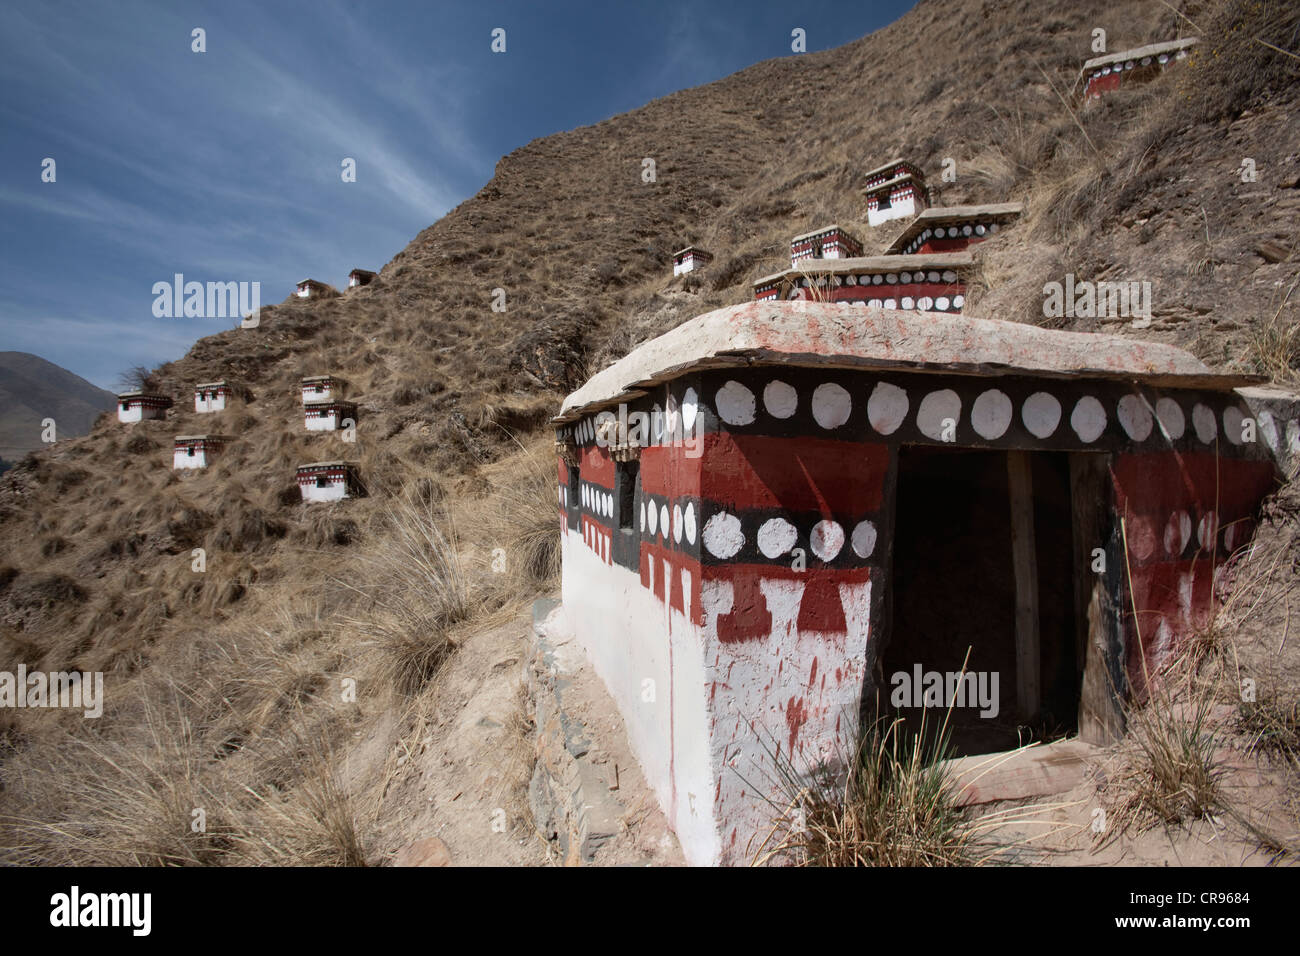 Labrang Tashikyil Monastery. A small religious building on a steep mountainside. Stock Photo